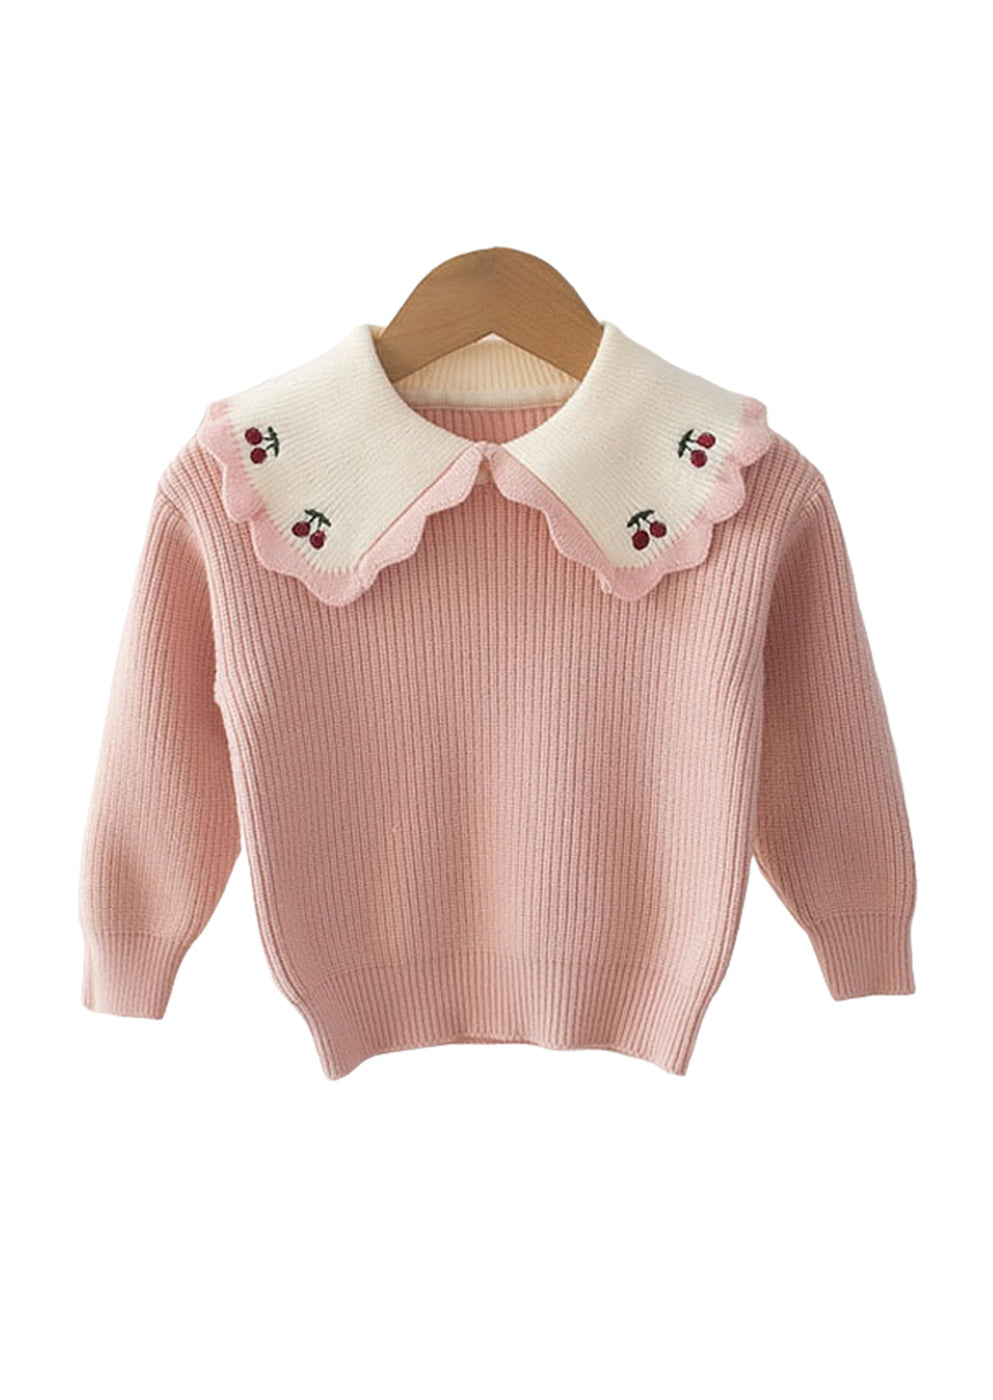 GIRLS - Toddler Girls Pink Embroidered Collar Sweater - Hannah Rose Vintage Boutique